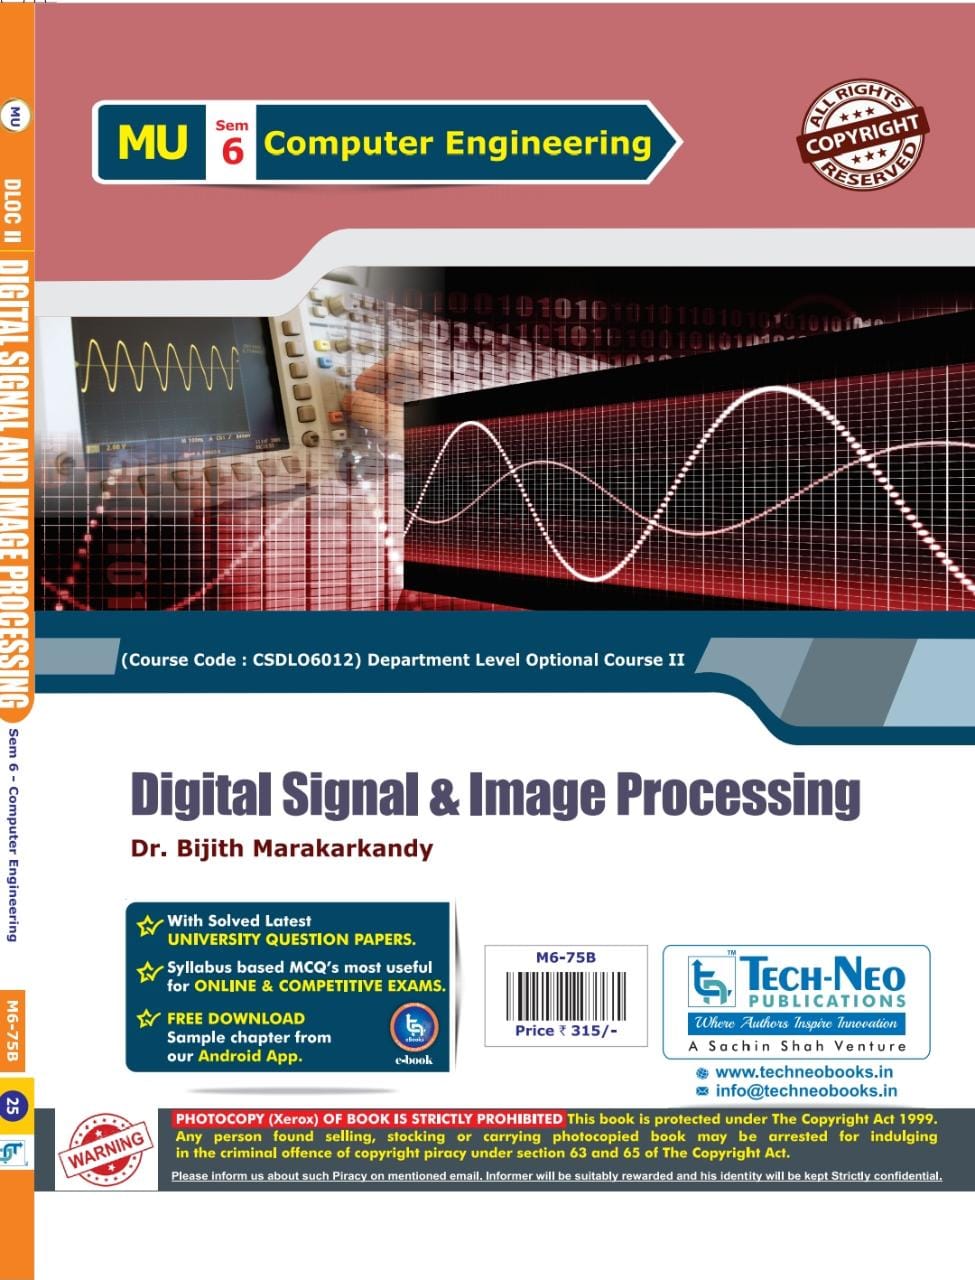 Digital Signal & Image Processing